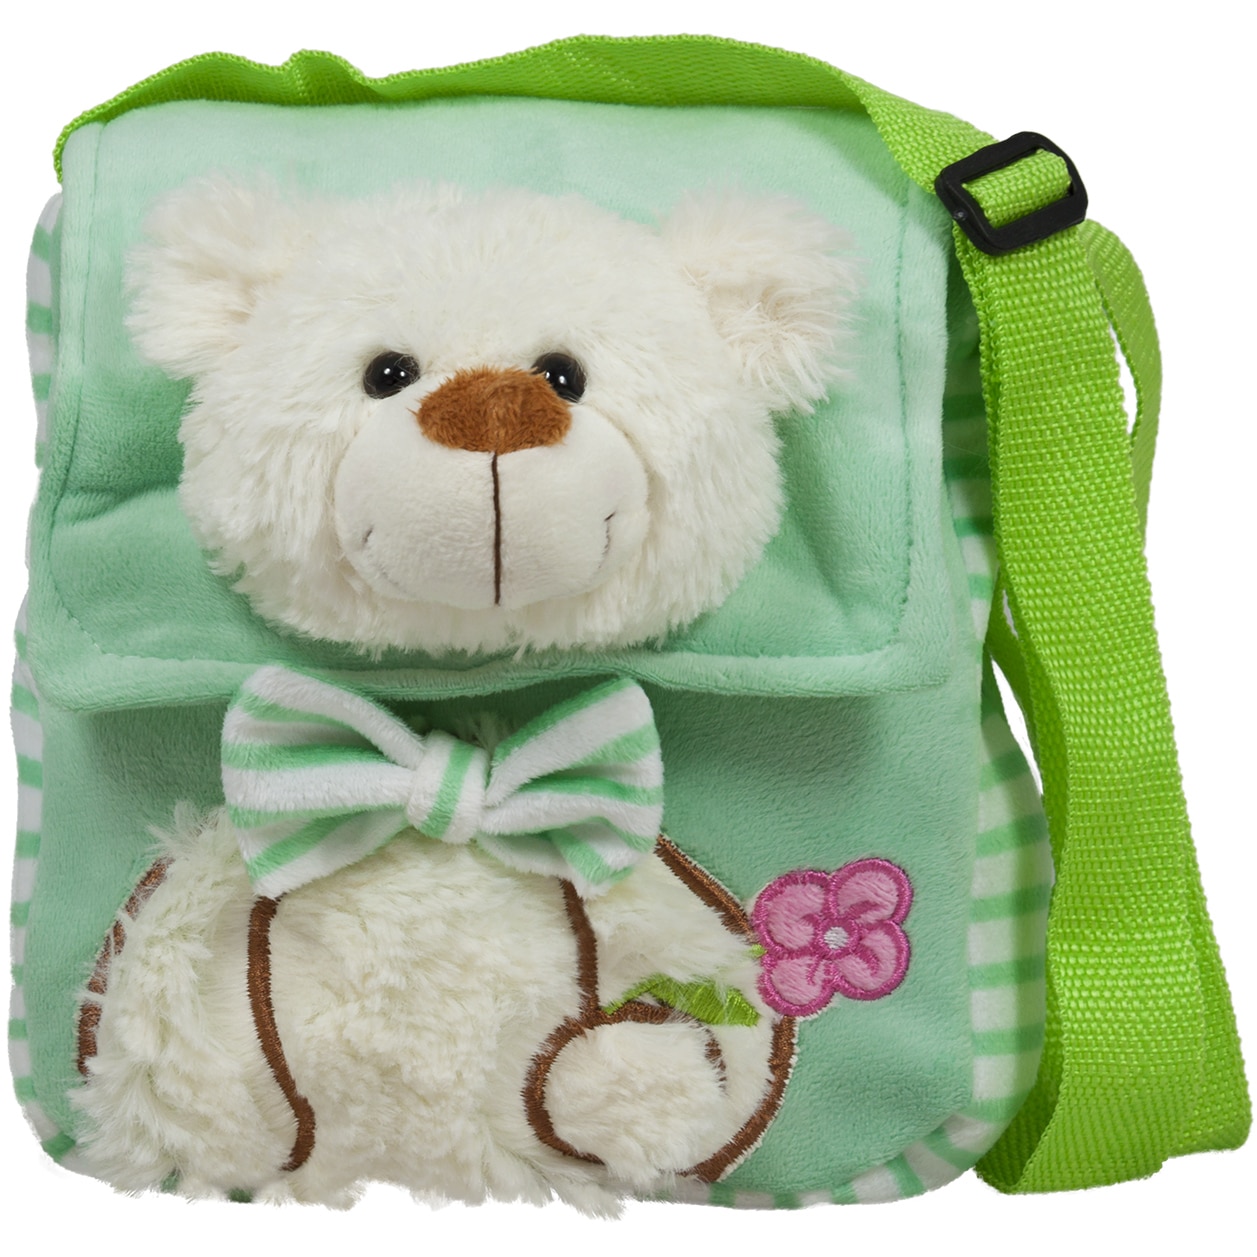 Bag with bear - Green